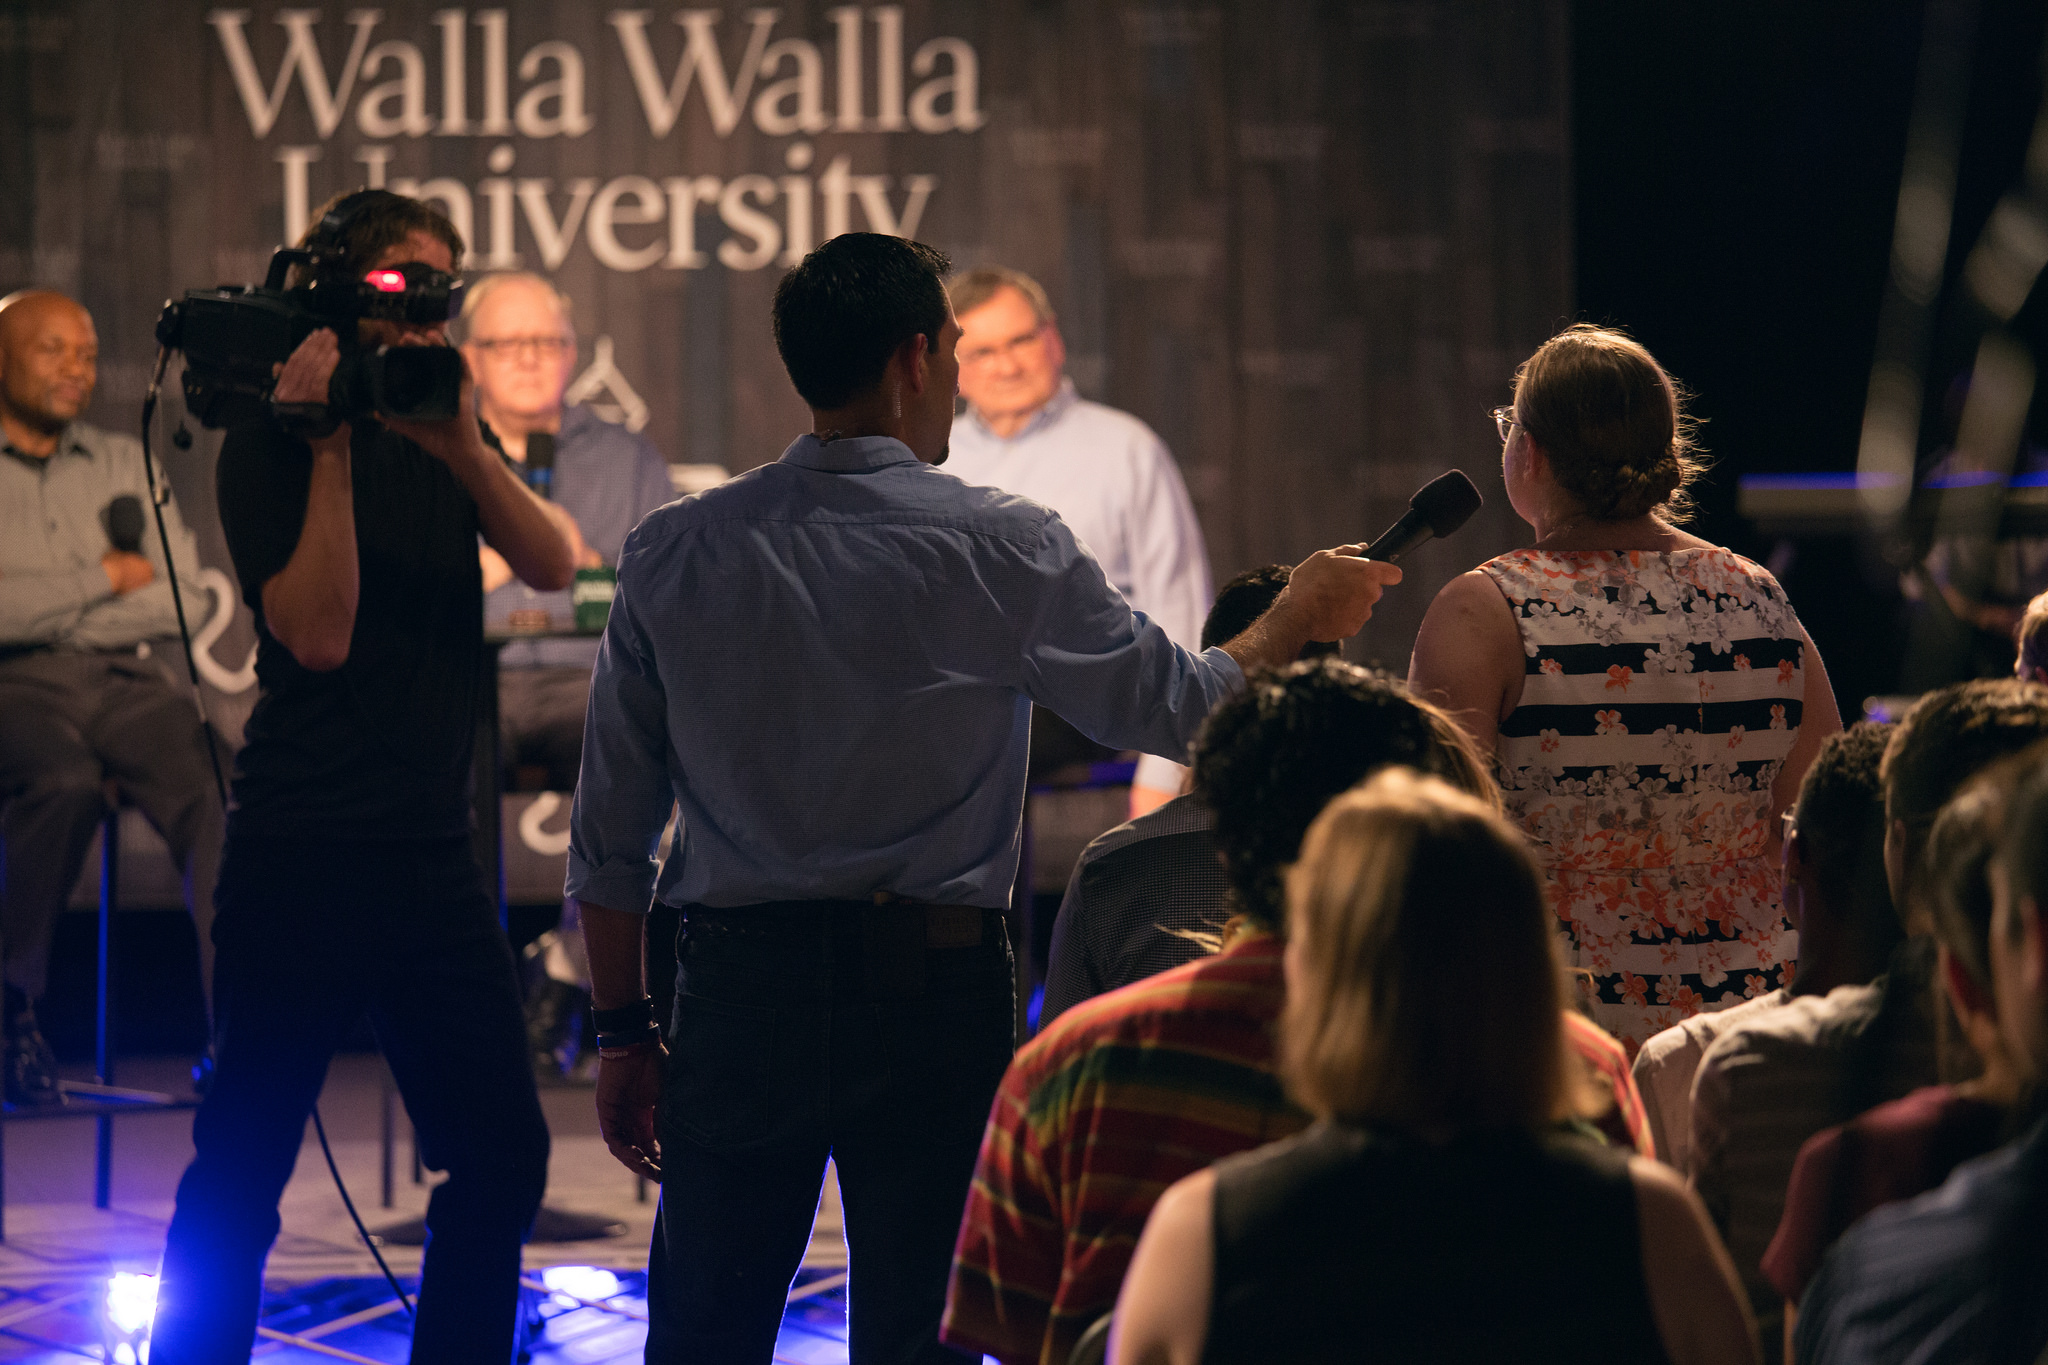 ITTO Walla Walla University Facebook Live show